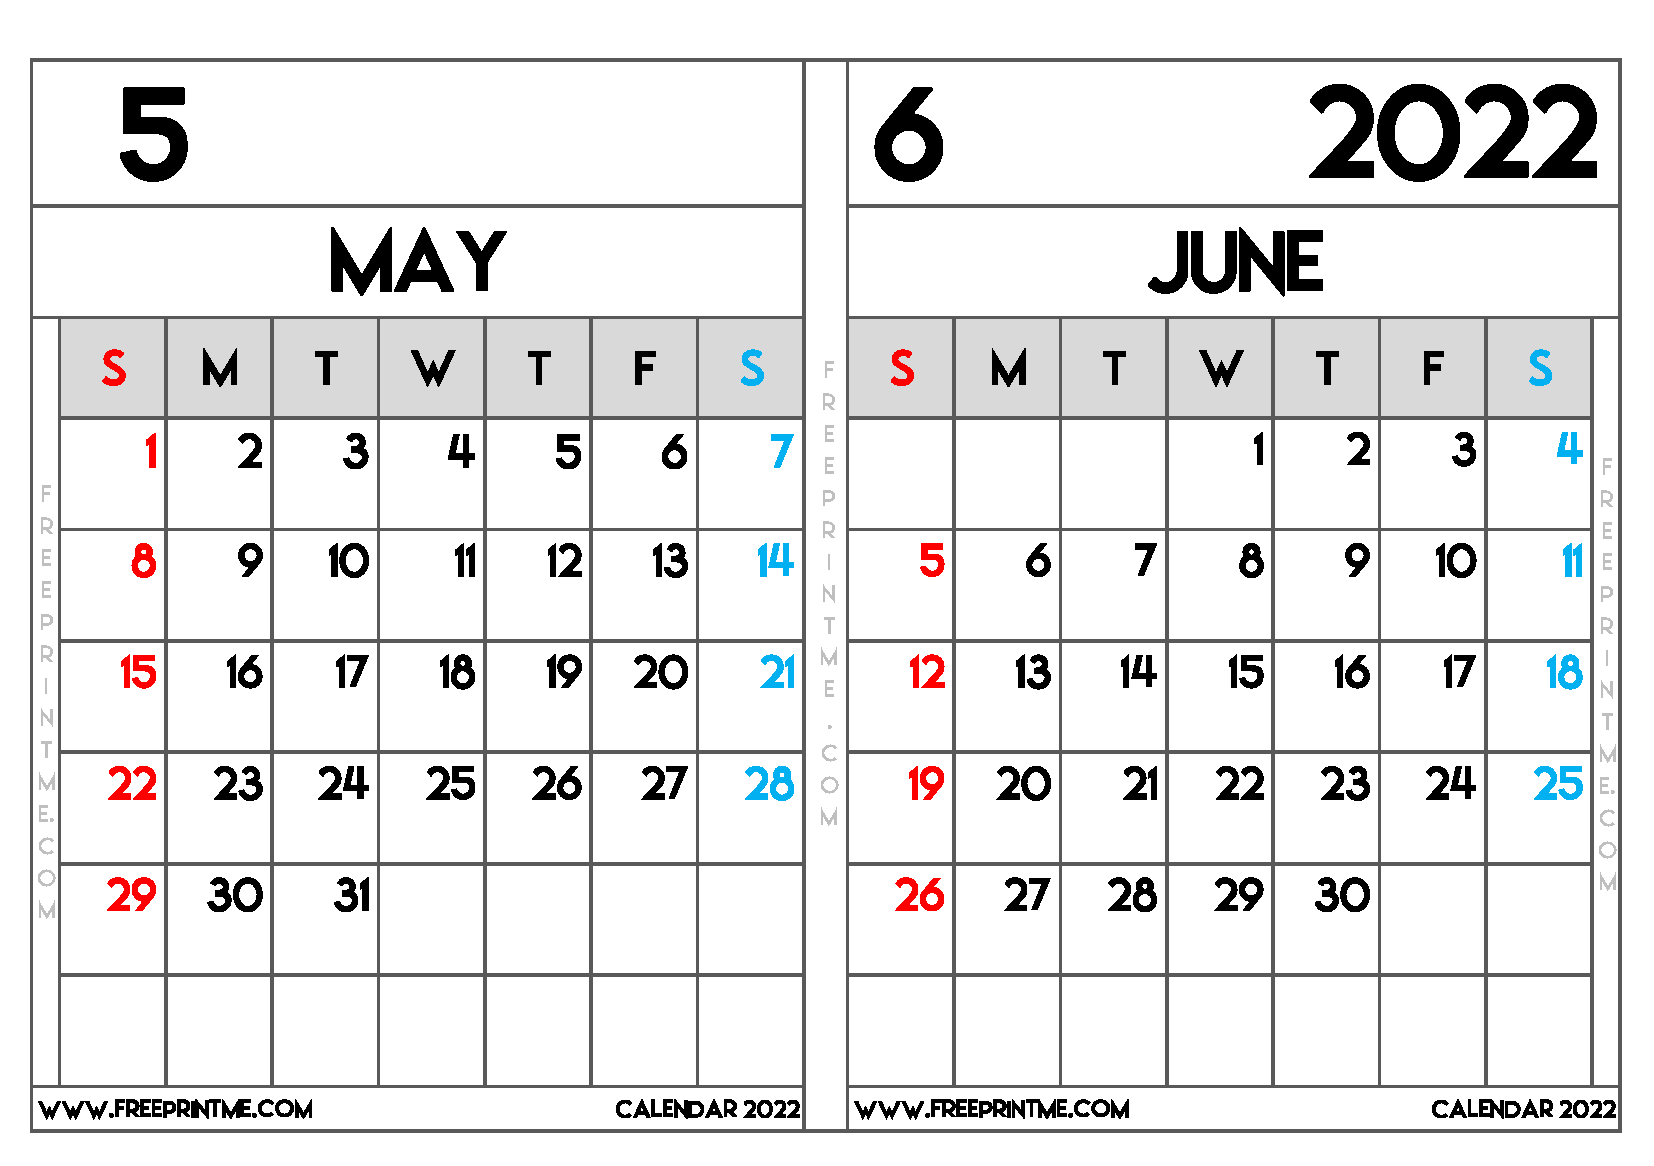 Free Printable Calendar 2022 May And June.Free Printable May And June 2022 Calendar A5 Wide